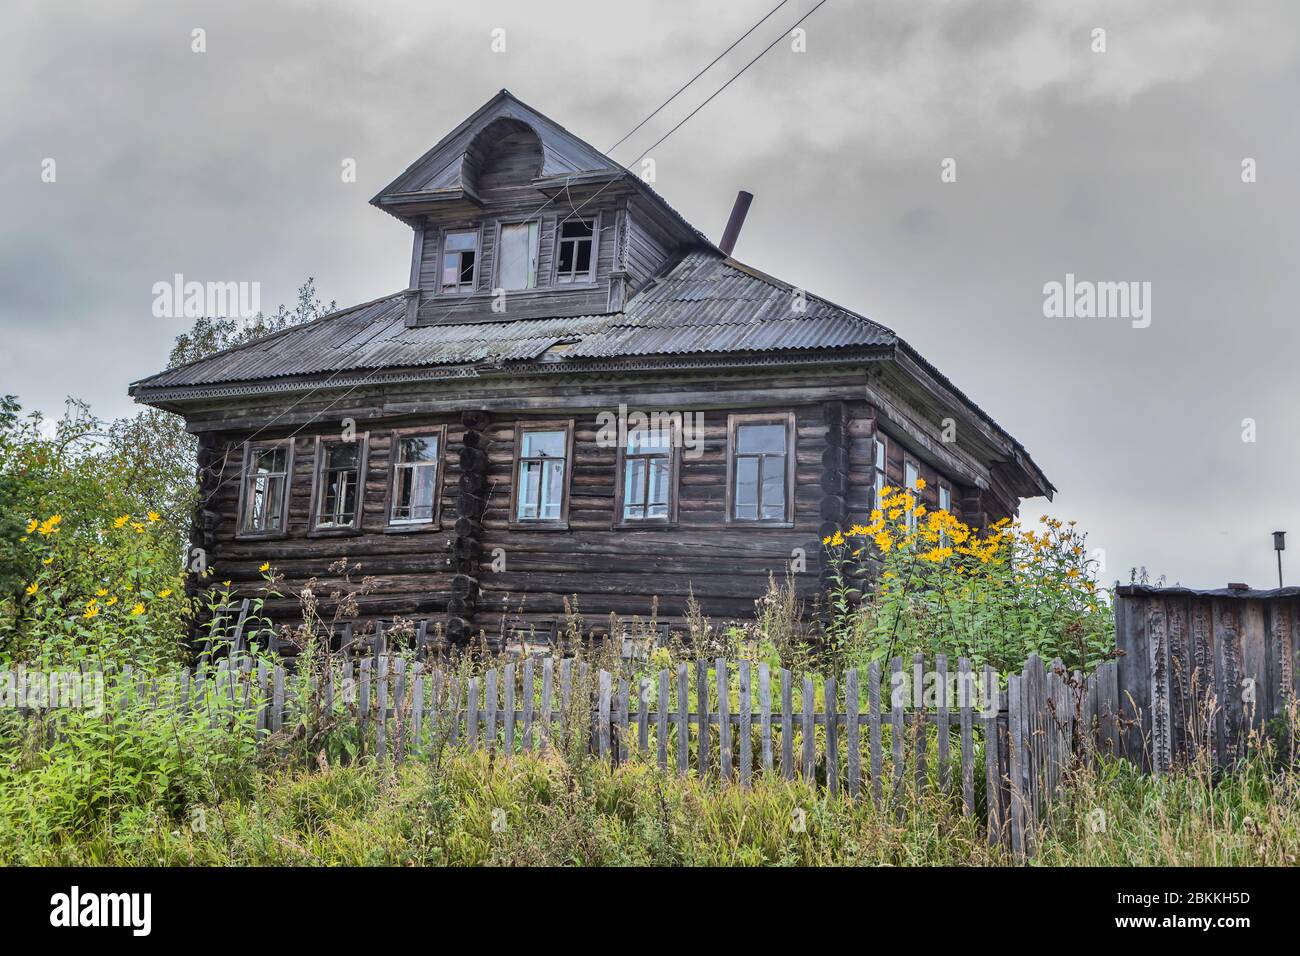 Wooden village house, Nutrenskoye, Vologda region, Russia Stock Photo